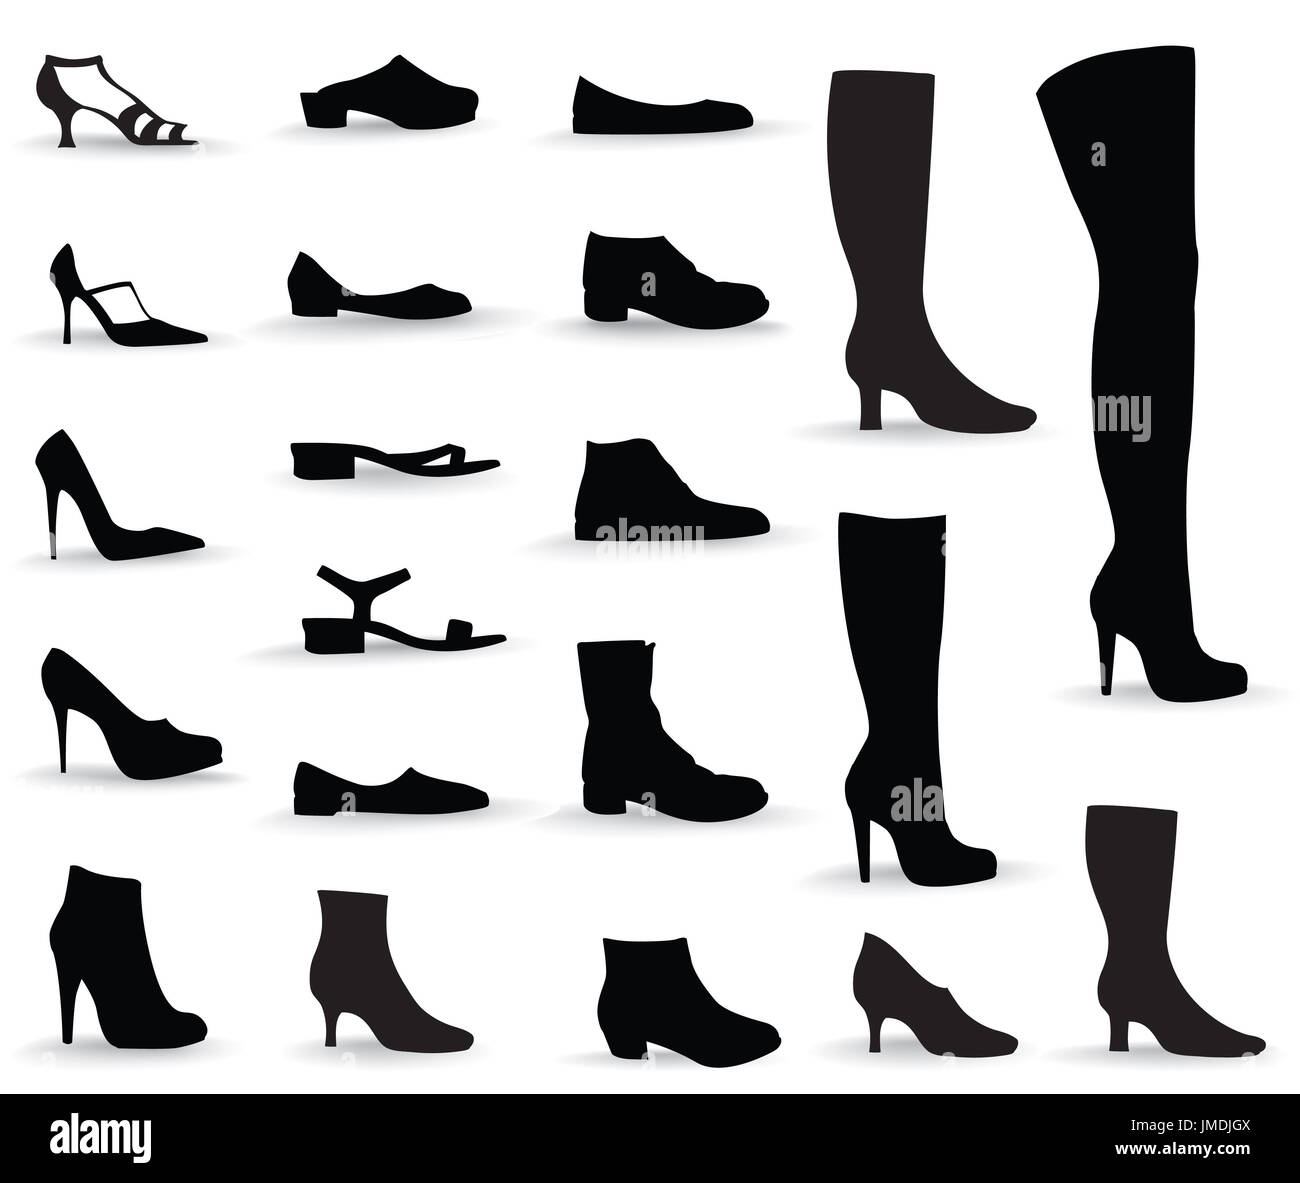 Chaussures icon set. Bottes chaussures de mode collection silhouettes Banque D'Images